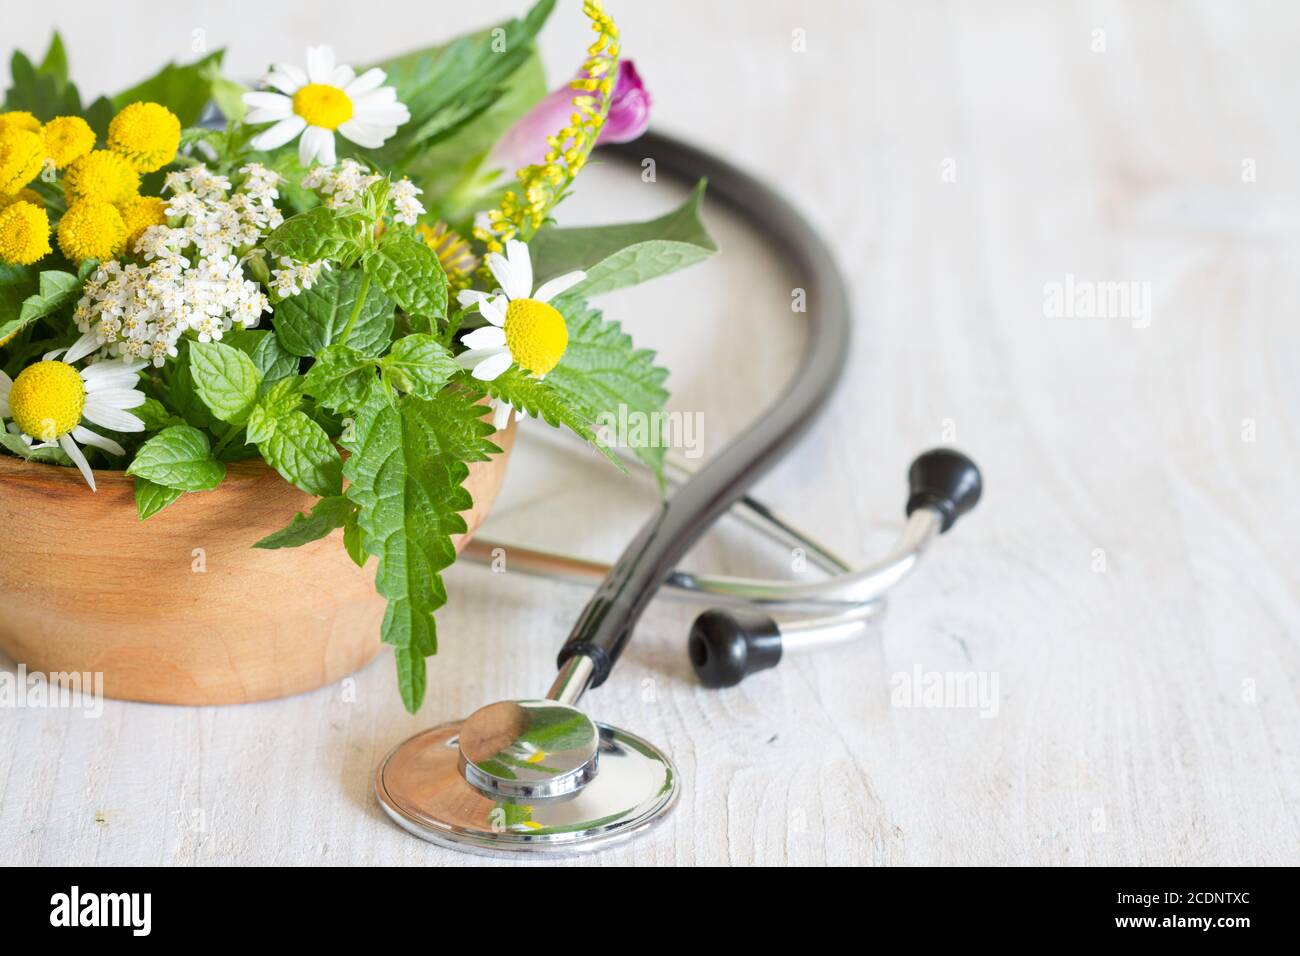 Fresh herbs and stethoscope alternative medicine concept Stock Photo